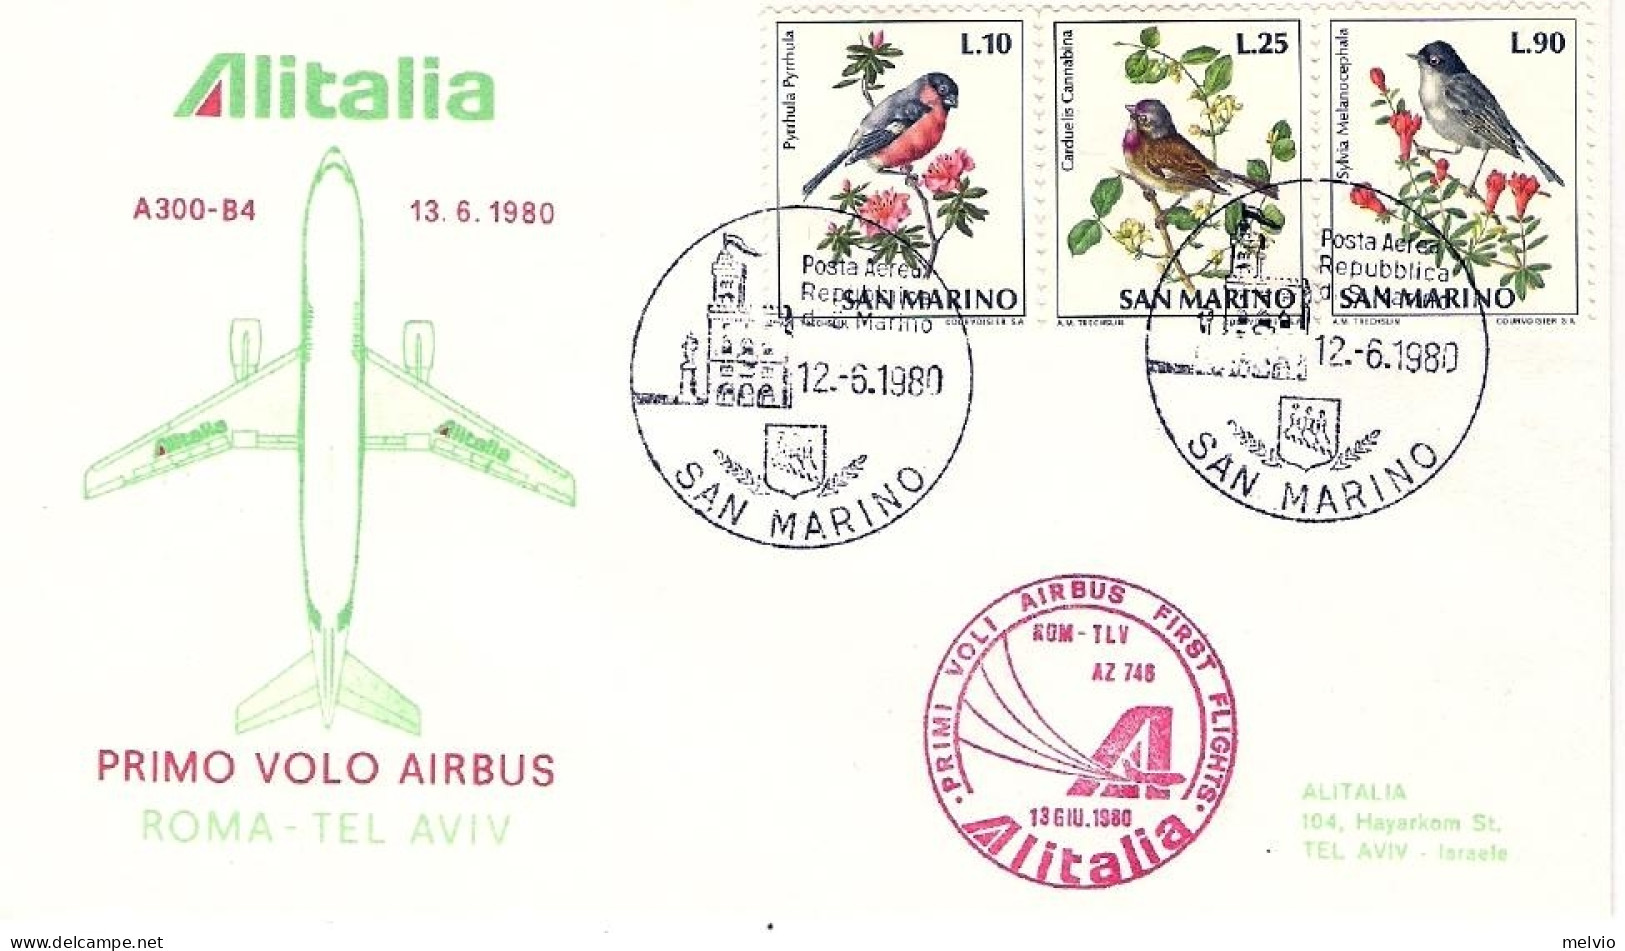 San Marino-1980 Alitalia I^volo Airbus Roma Tel Aviv - Airmail